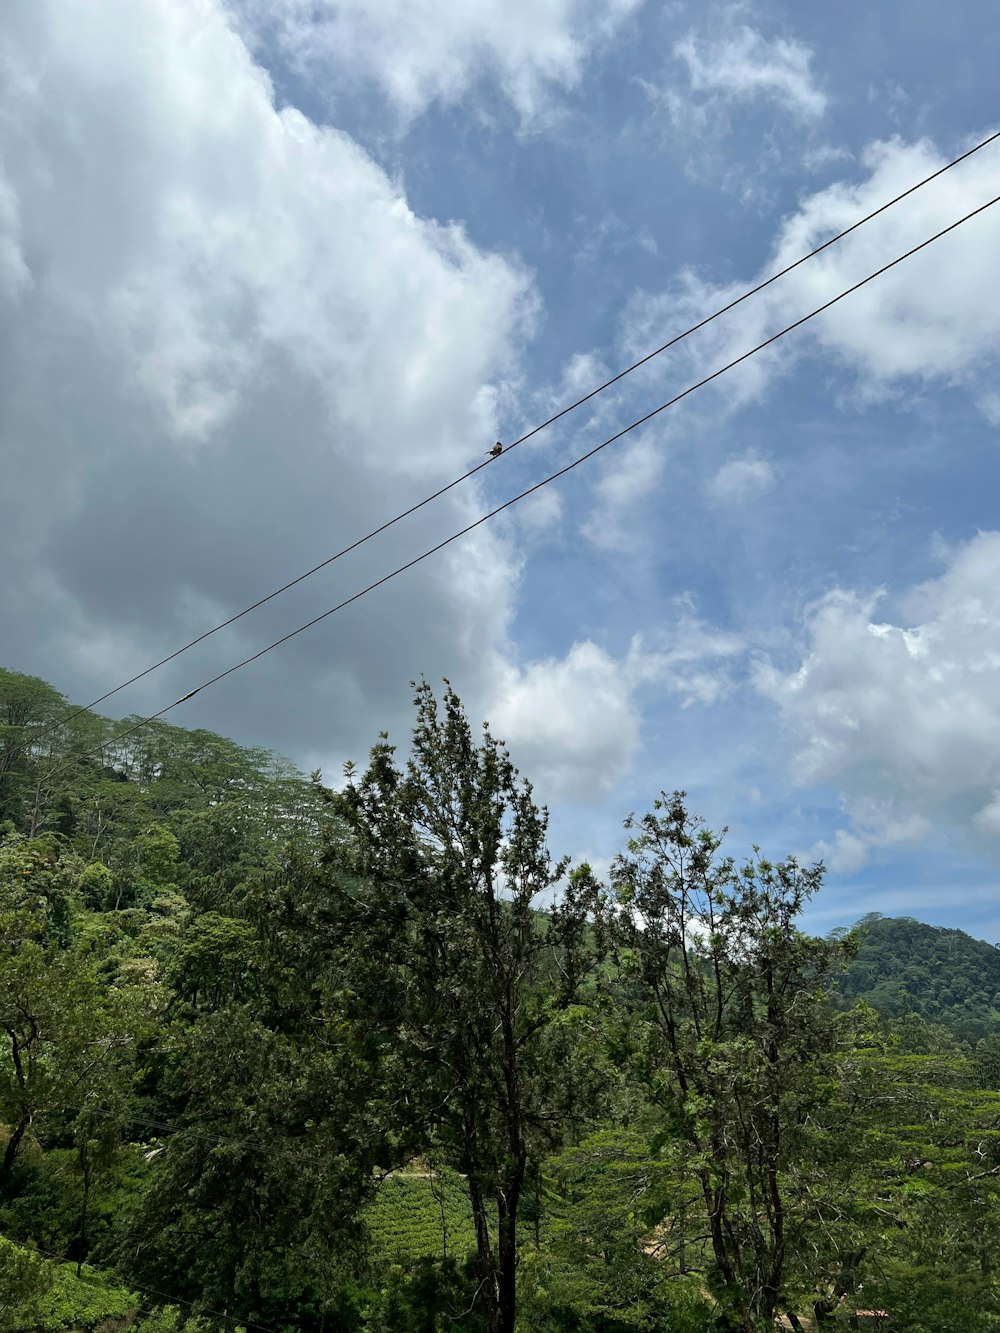 a view of a lush green hillside under a cloudy blue sky